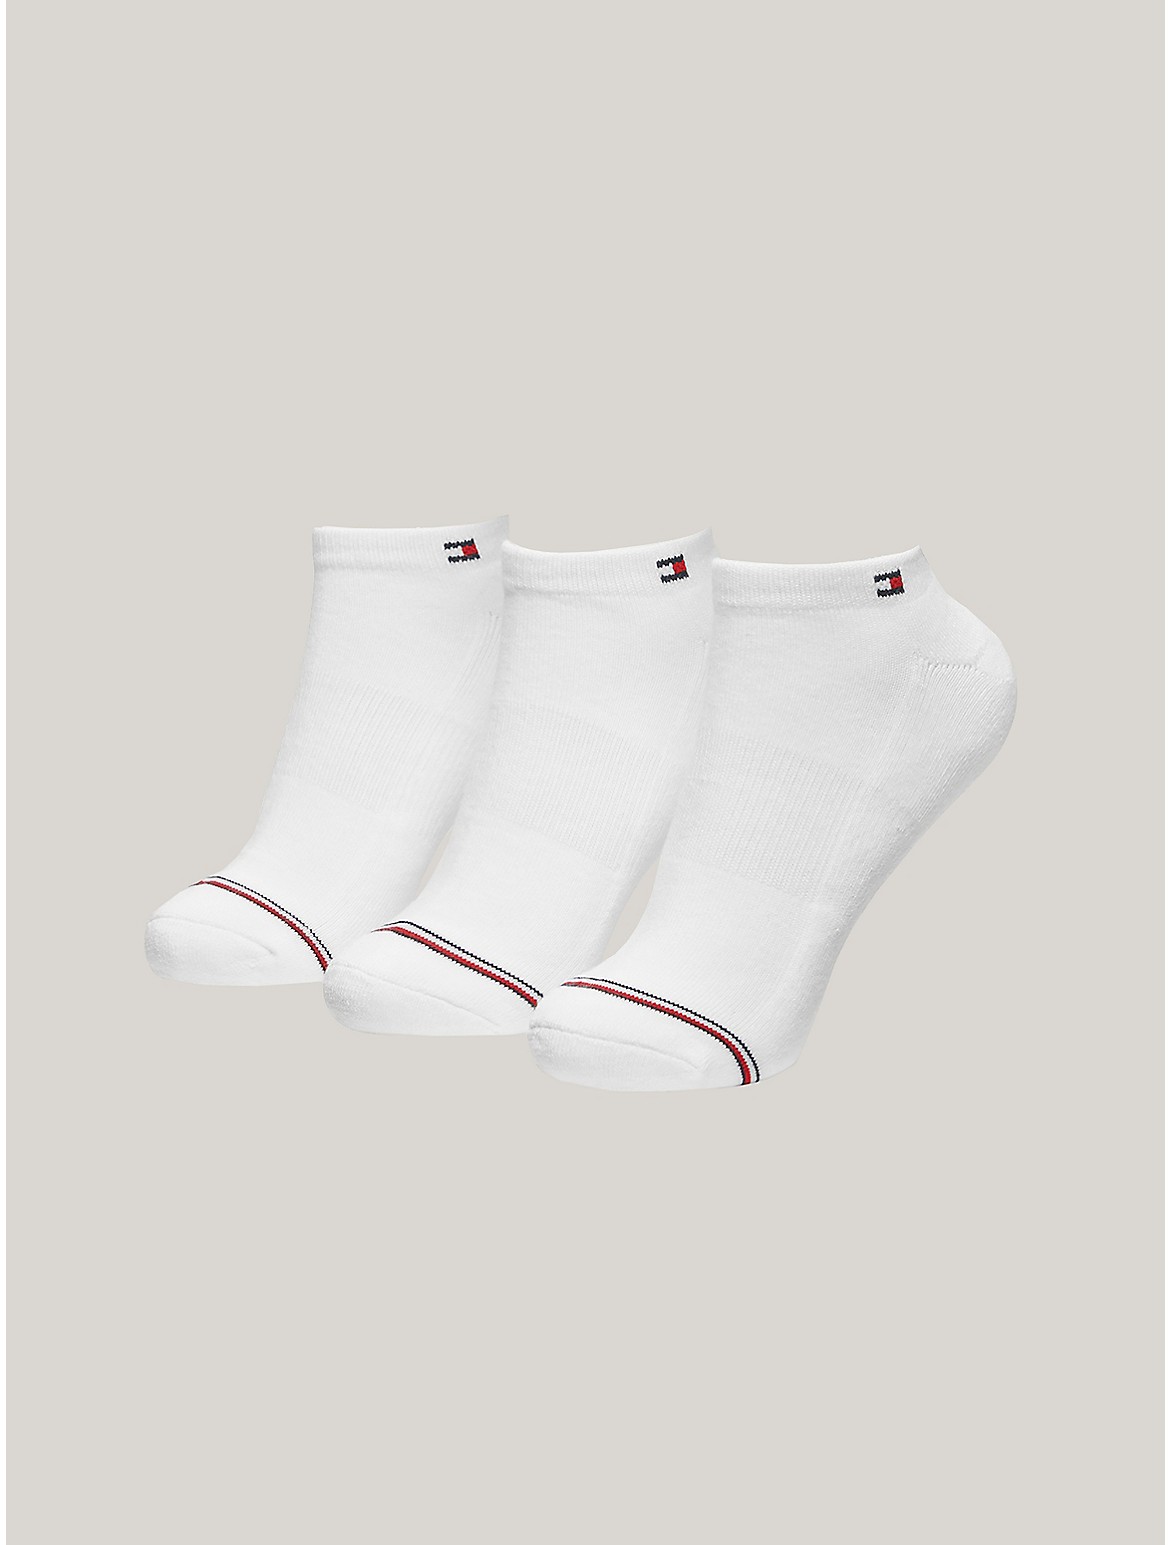 Tommy Hilfiger Women's Ankle Sock 3-Pack